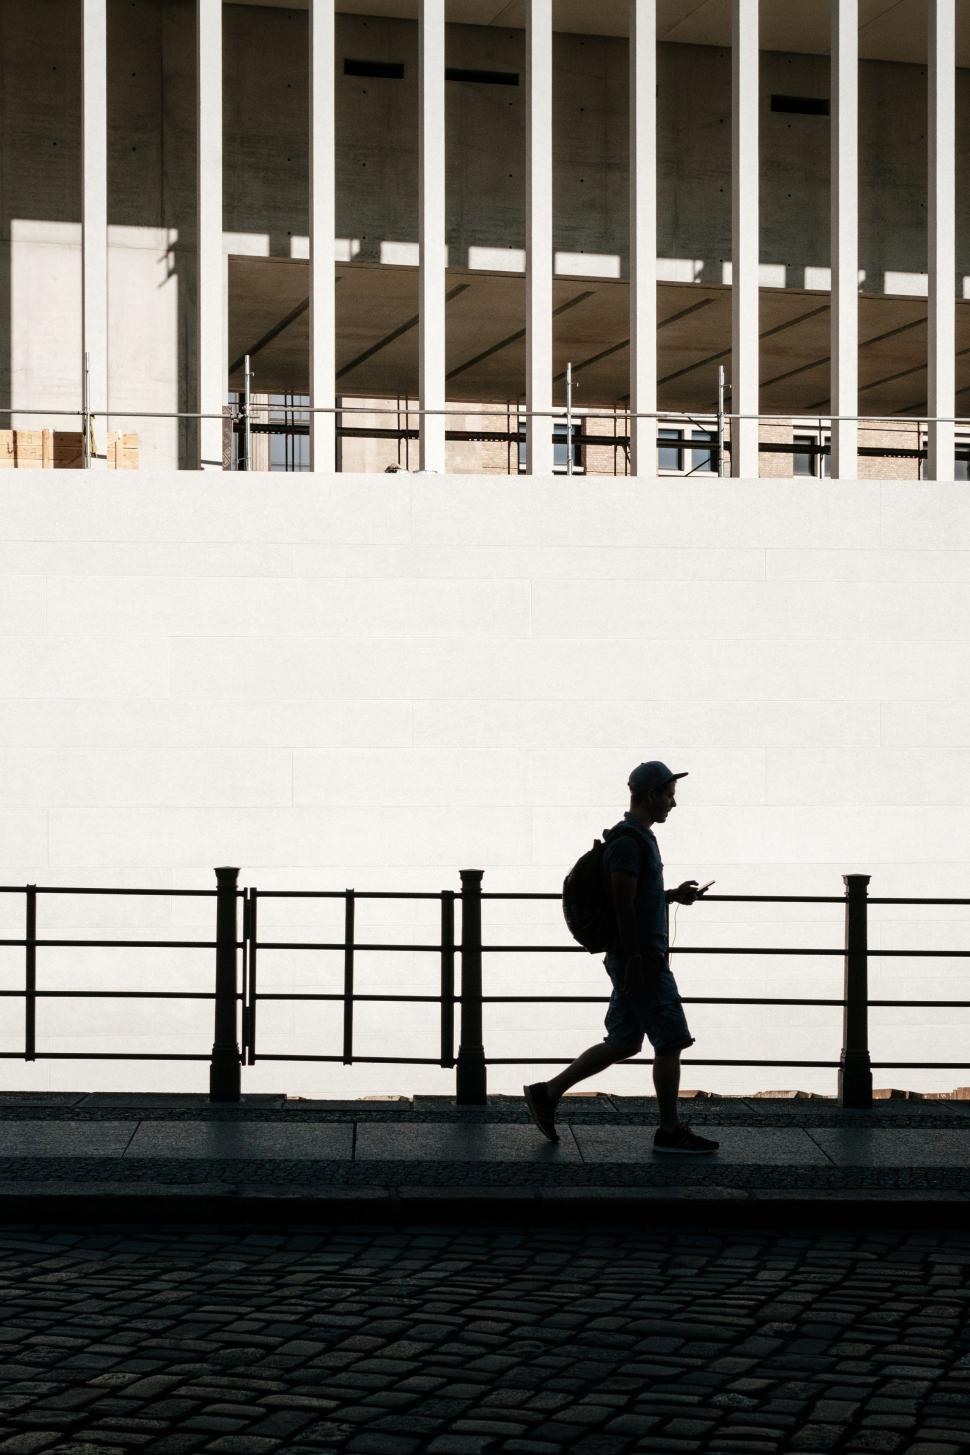 Free Image of Man Walking Down Sidewalk Next to Tall Building 